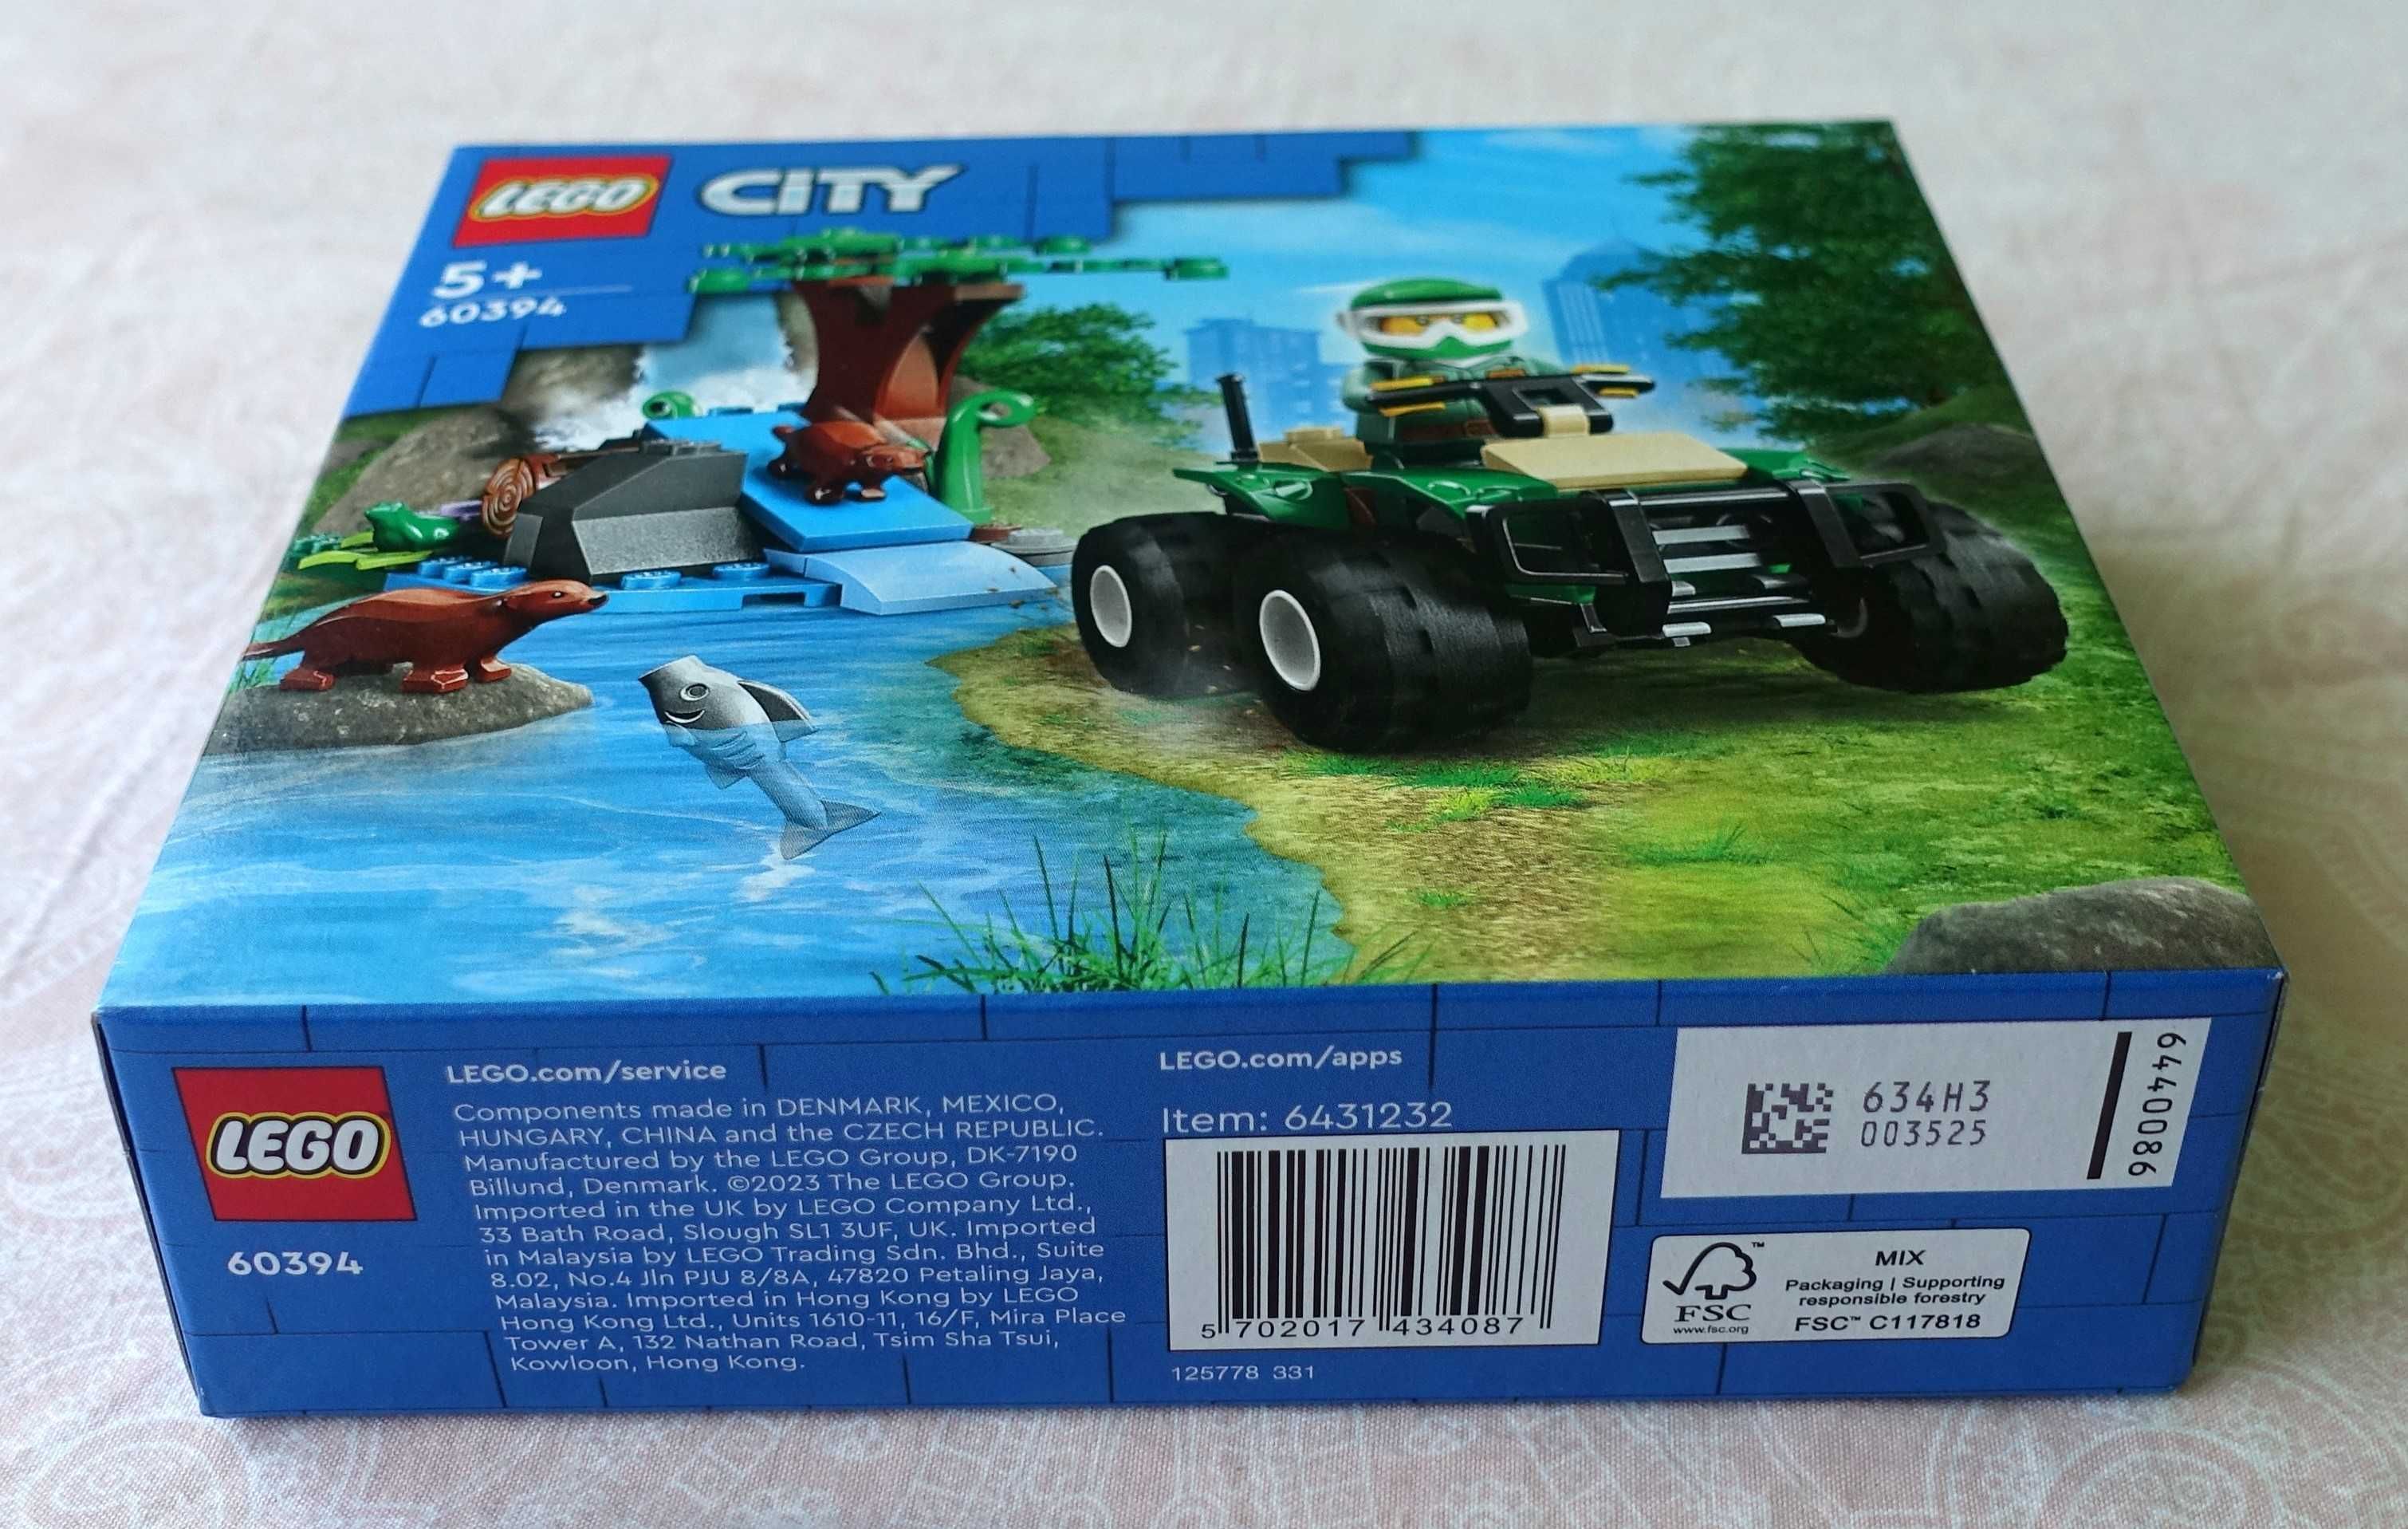 LEGO City 60394 - Quad i siedlisko wydry, NOWE!